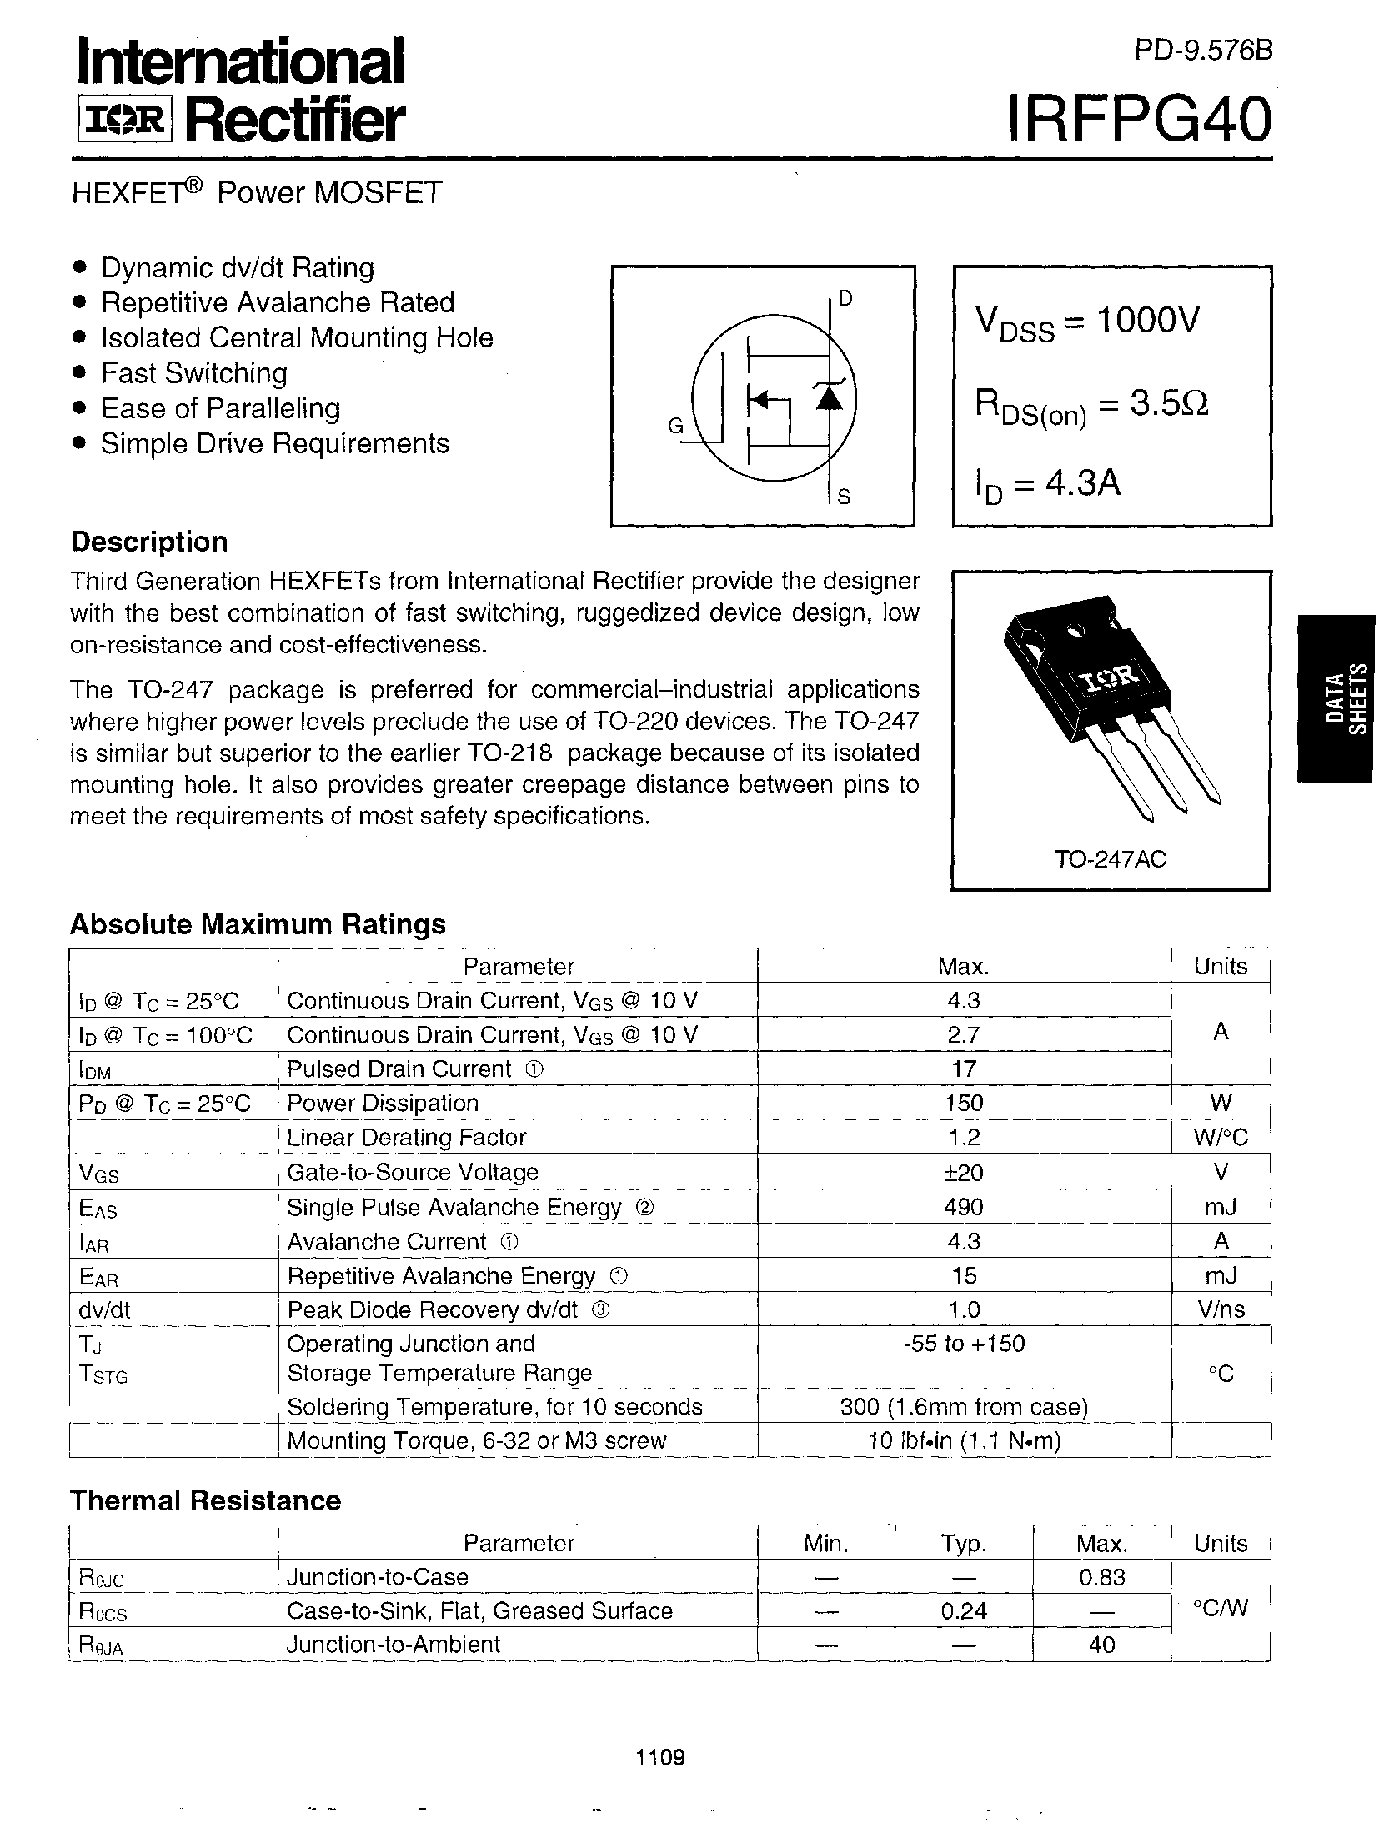 Datasheet IRFPG40 - Power MOSFET page 1